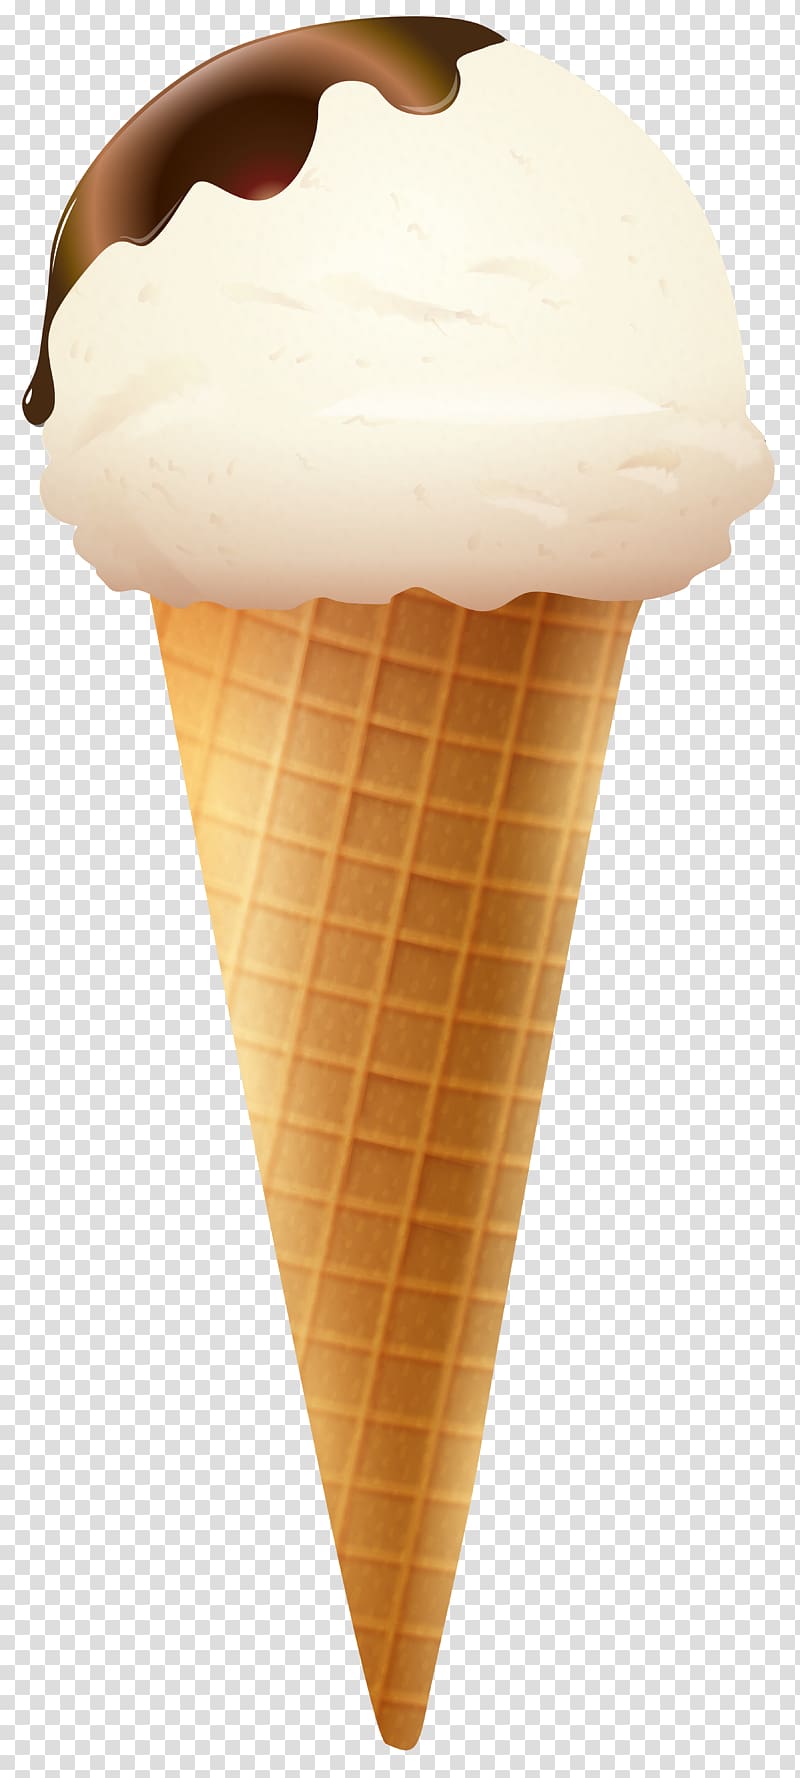 white ice cream cone illustration, Ice cream cone Snow cone Sundae, Ice Cream Cone transparent background PNG clipart